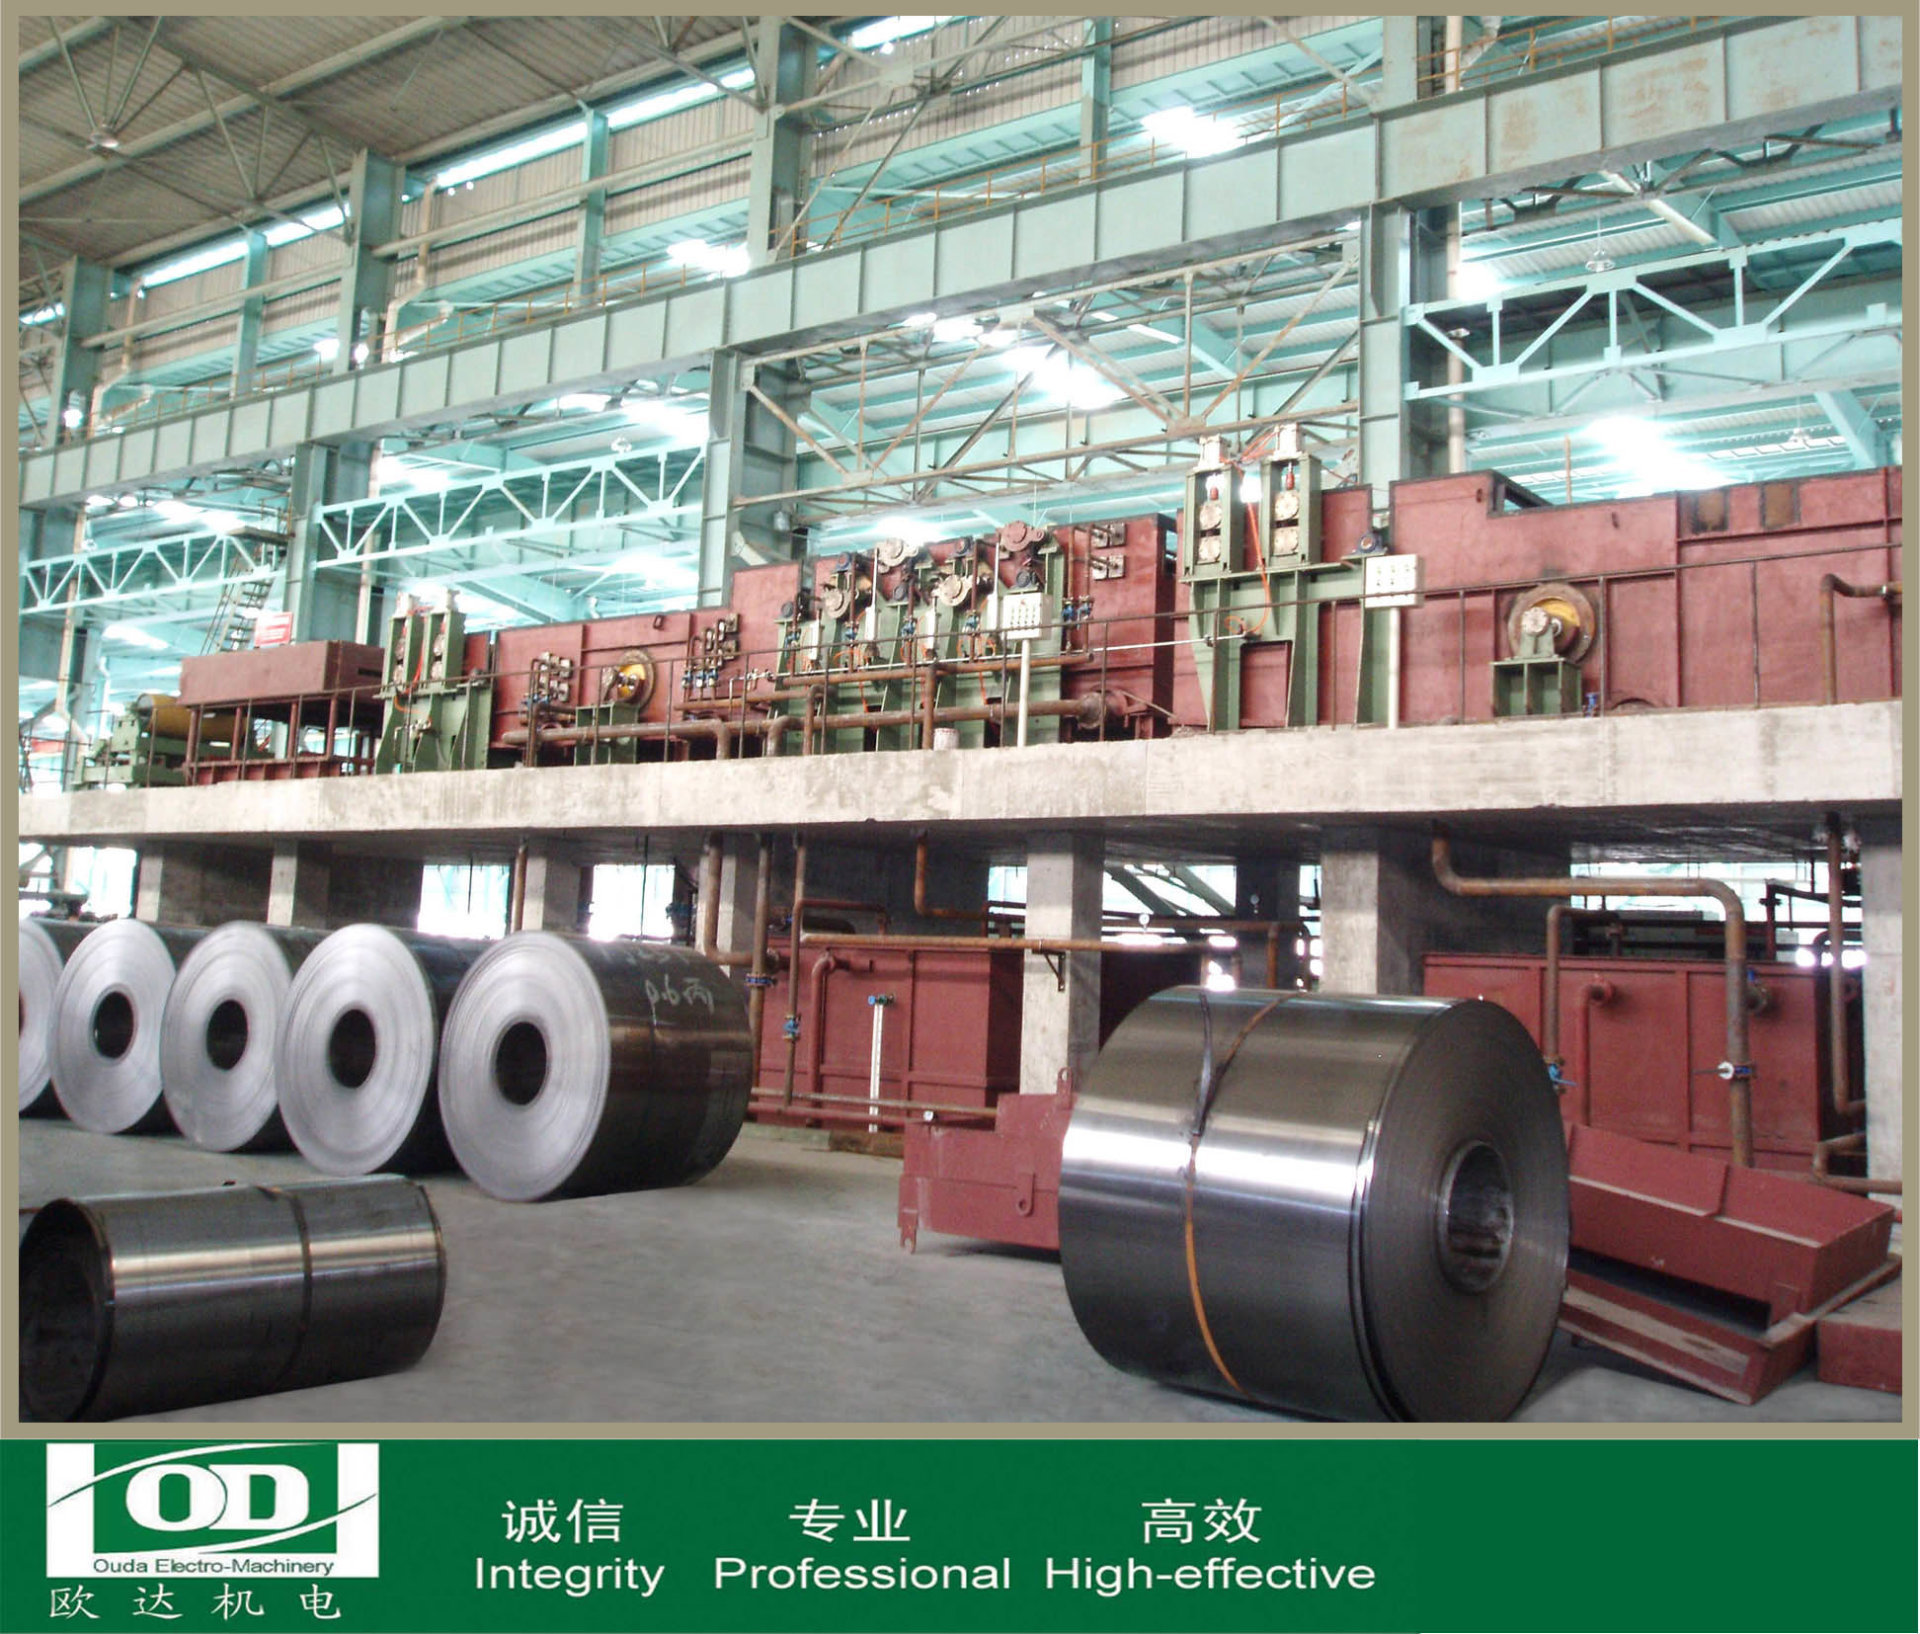 Carbon Steel Equipment - Degreasing Line